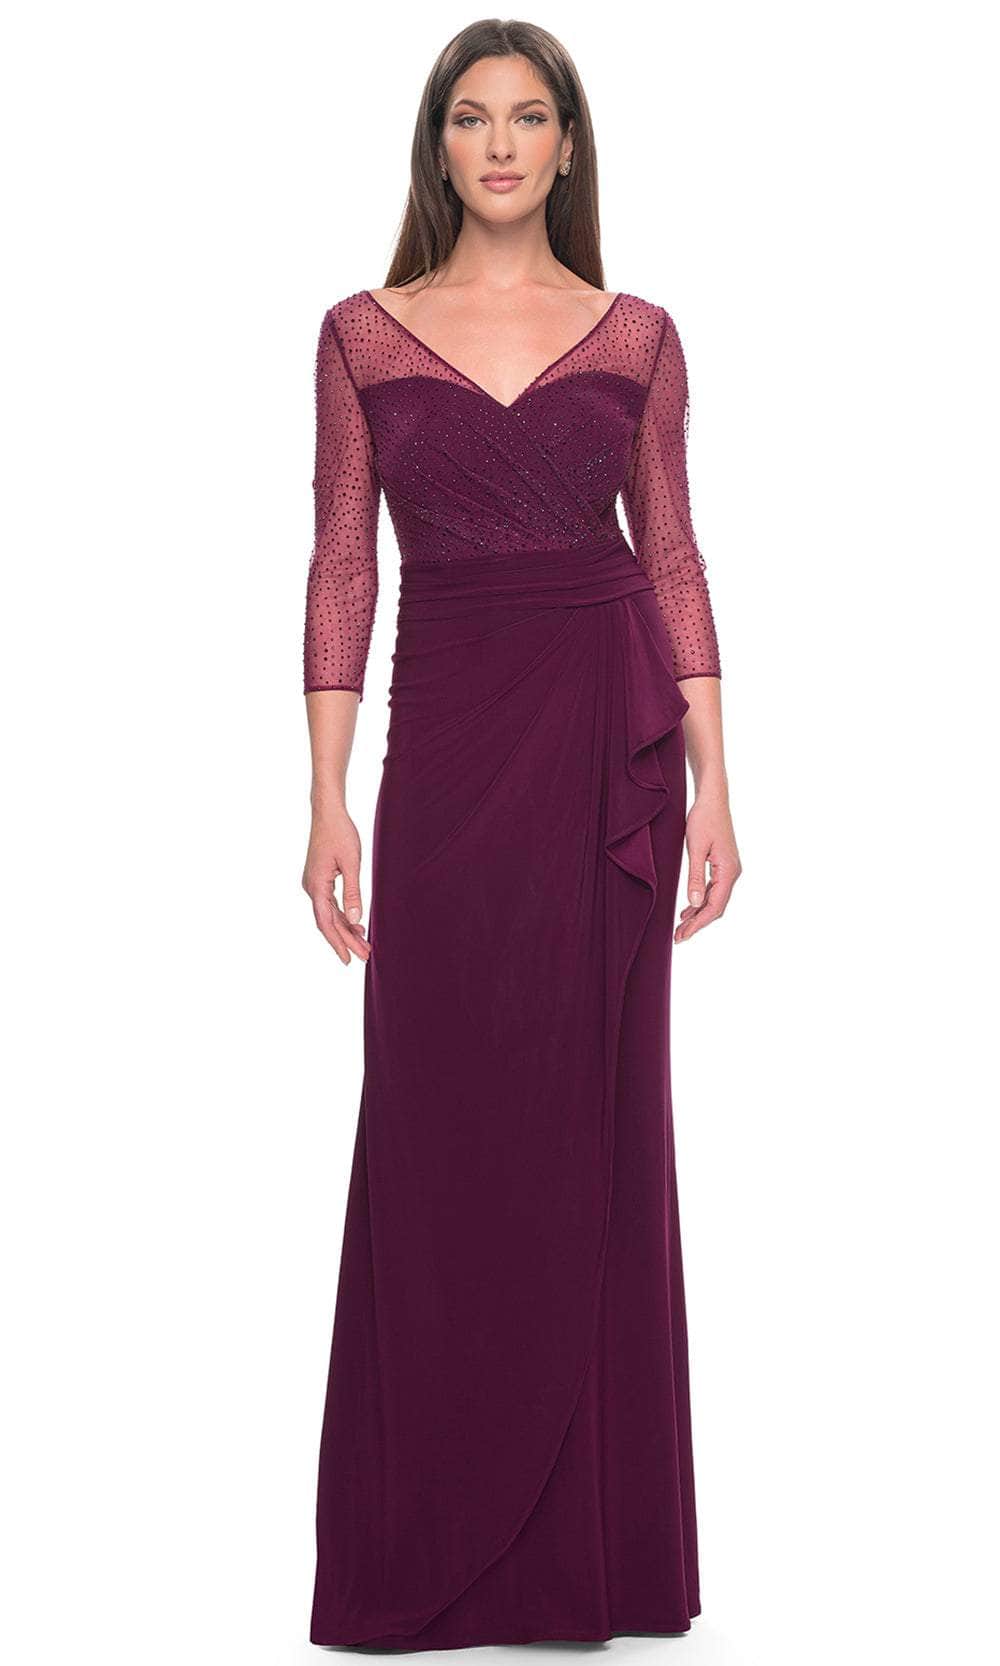 Image of La Femme 31777 - Illusion V-Neck Rhinestone Formal Dress